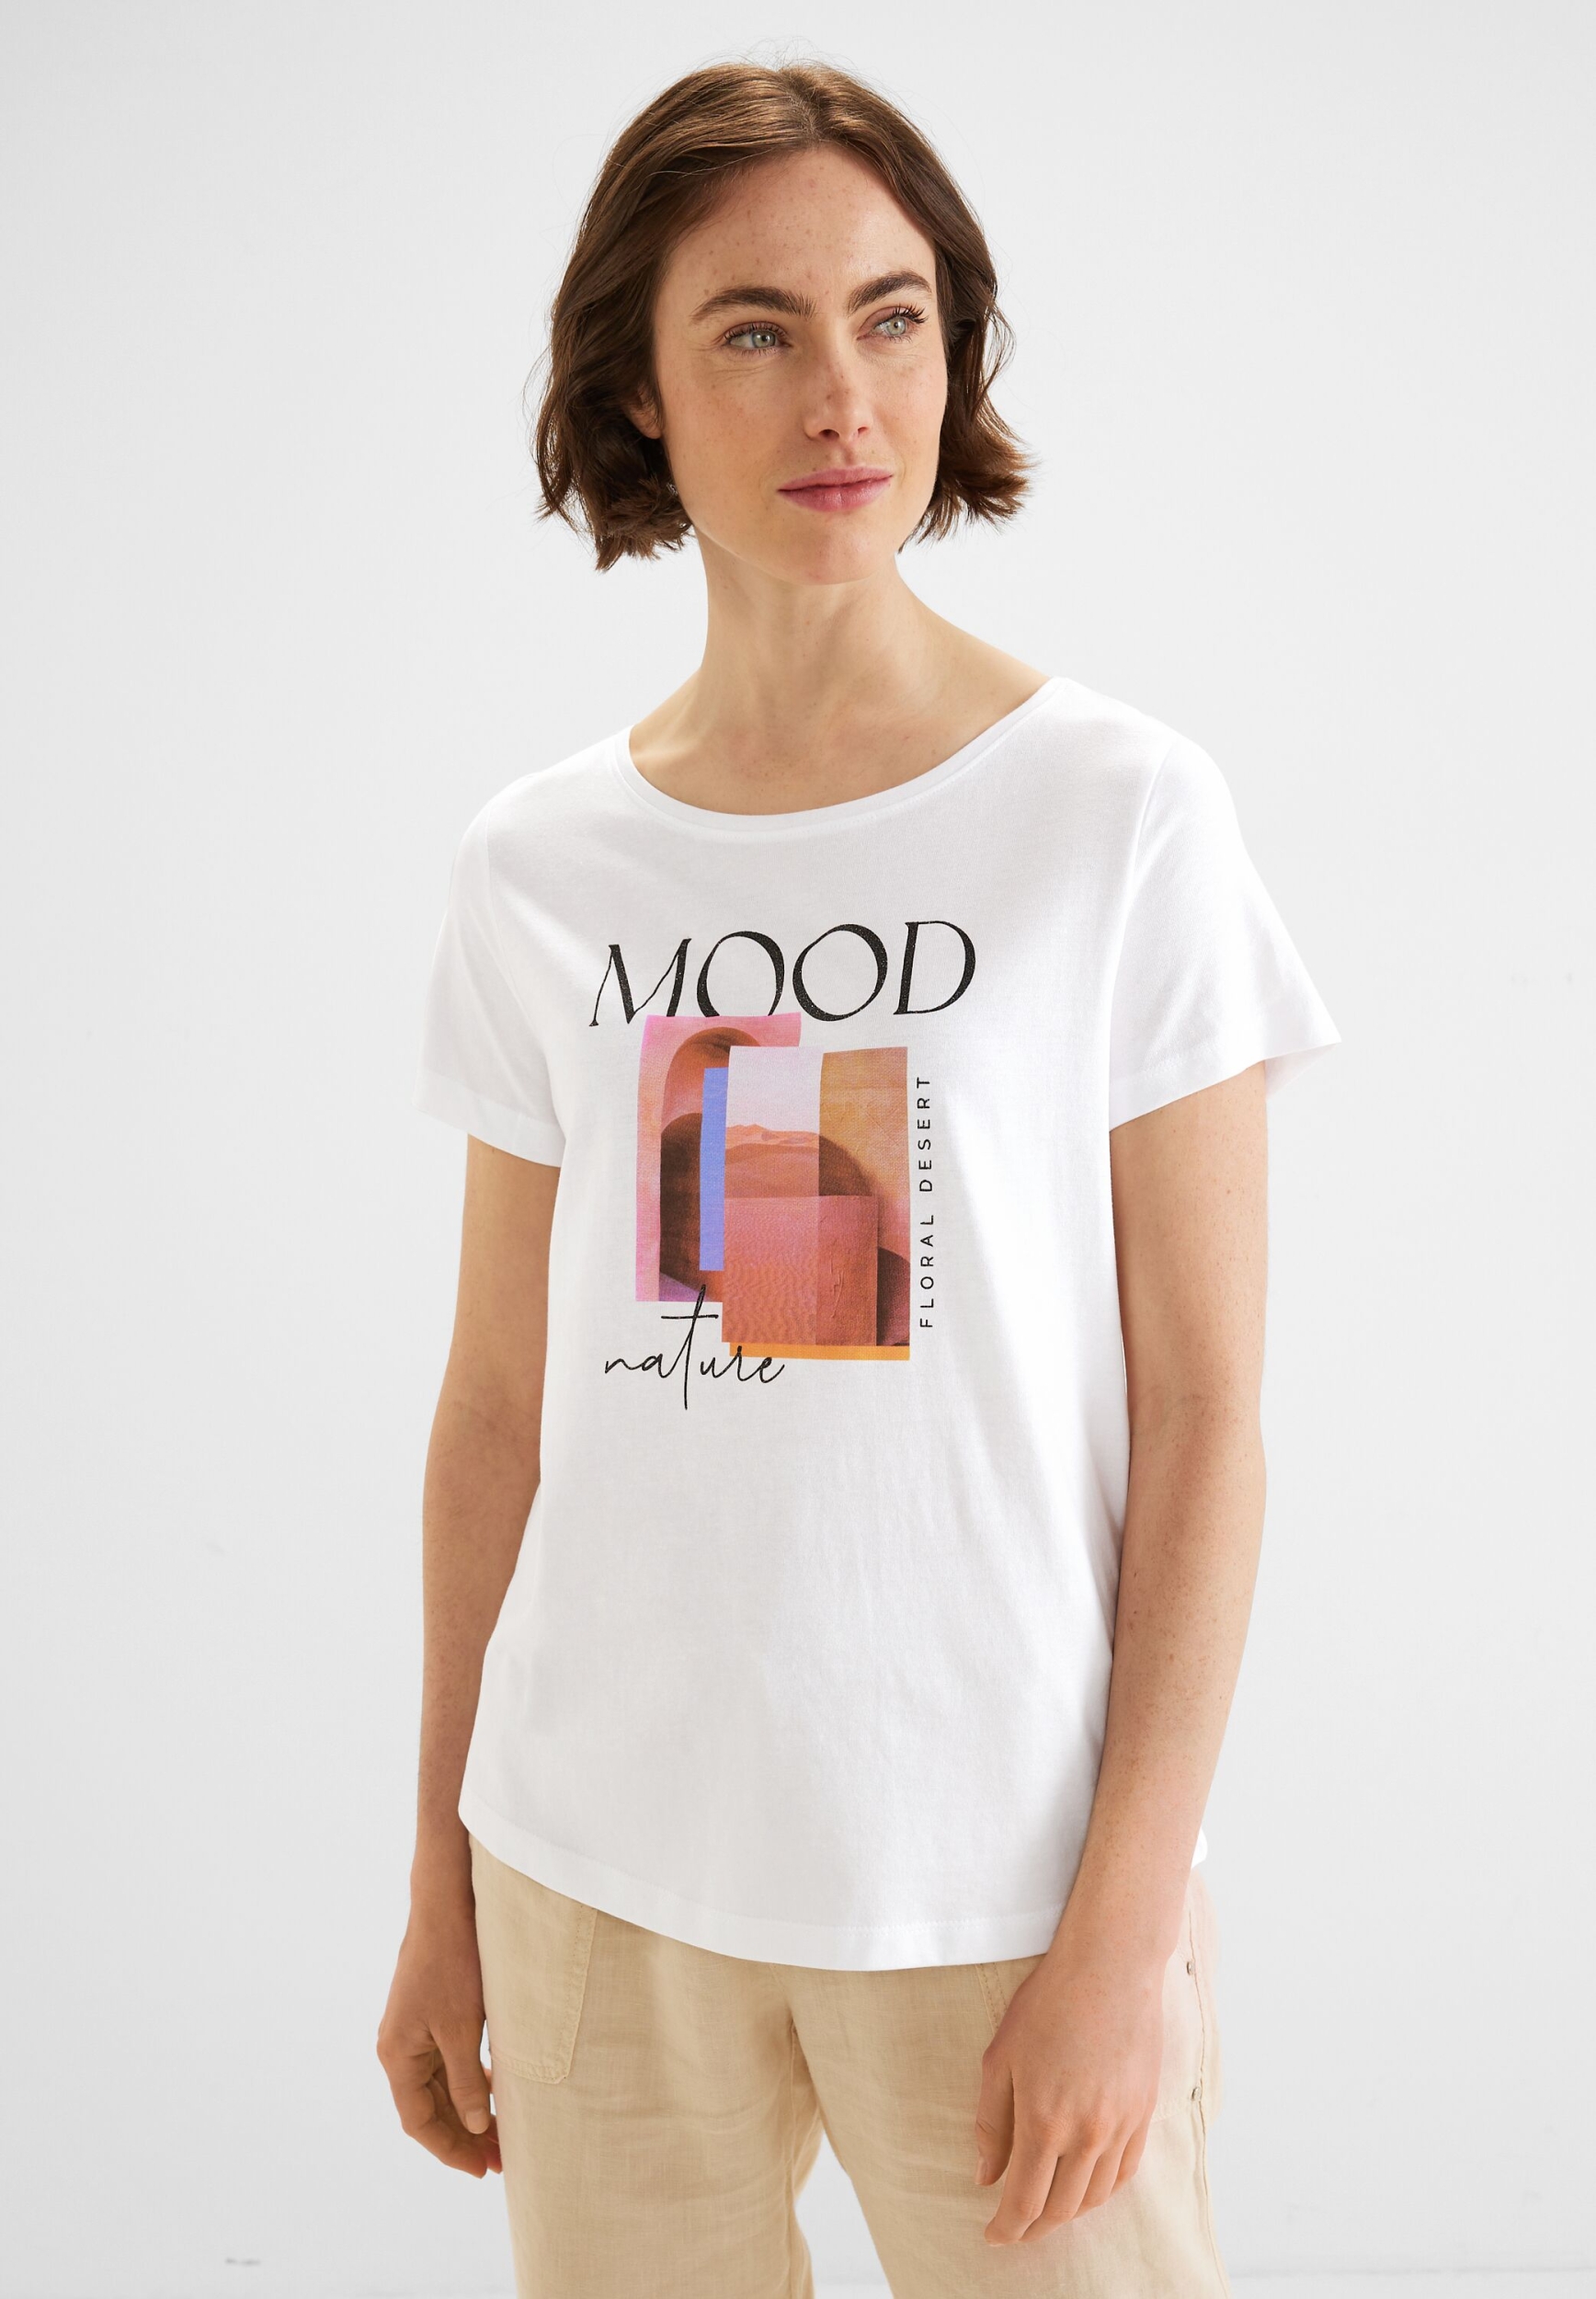 MOOD part print shirt | 40 | white | A320069-30000-40